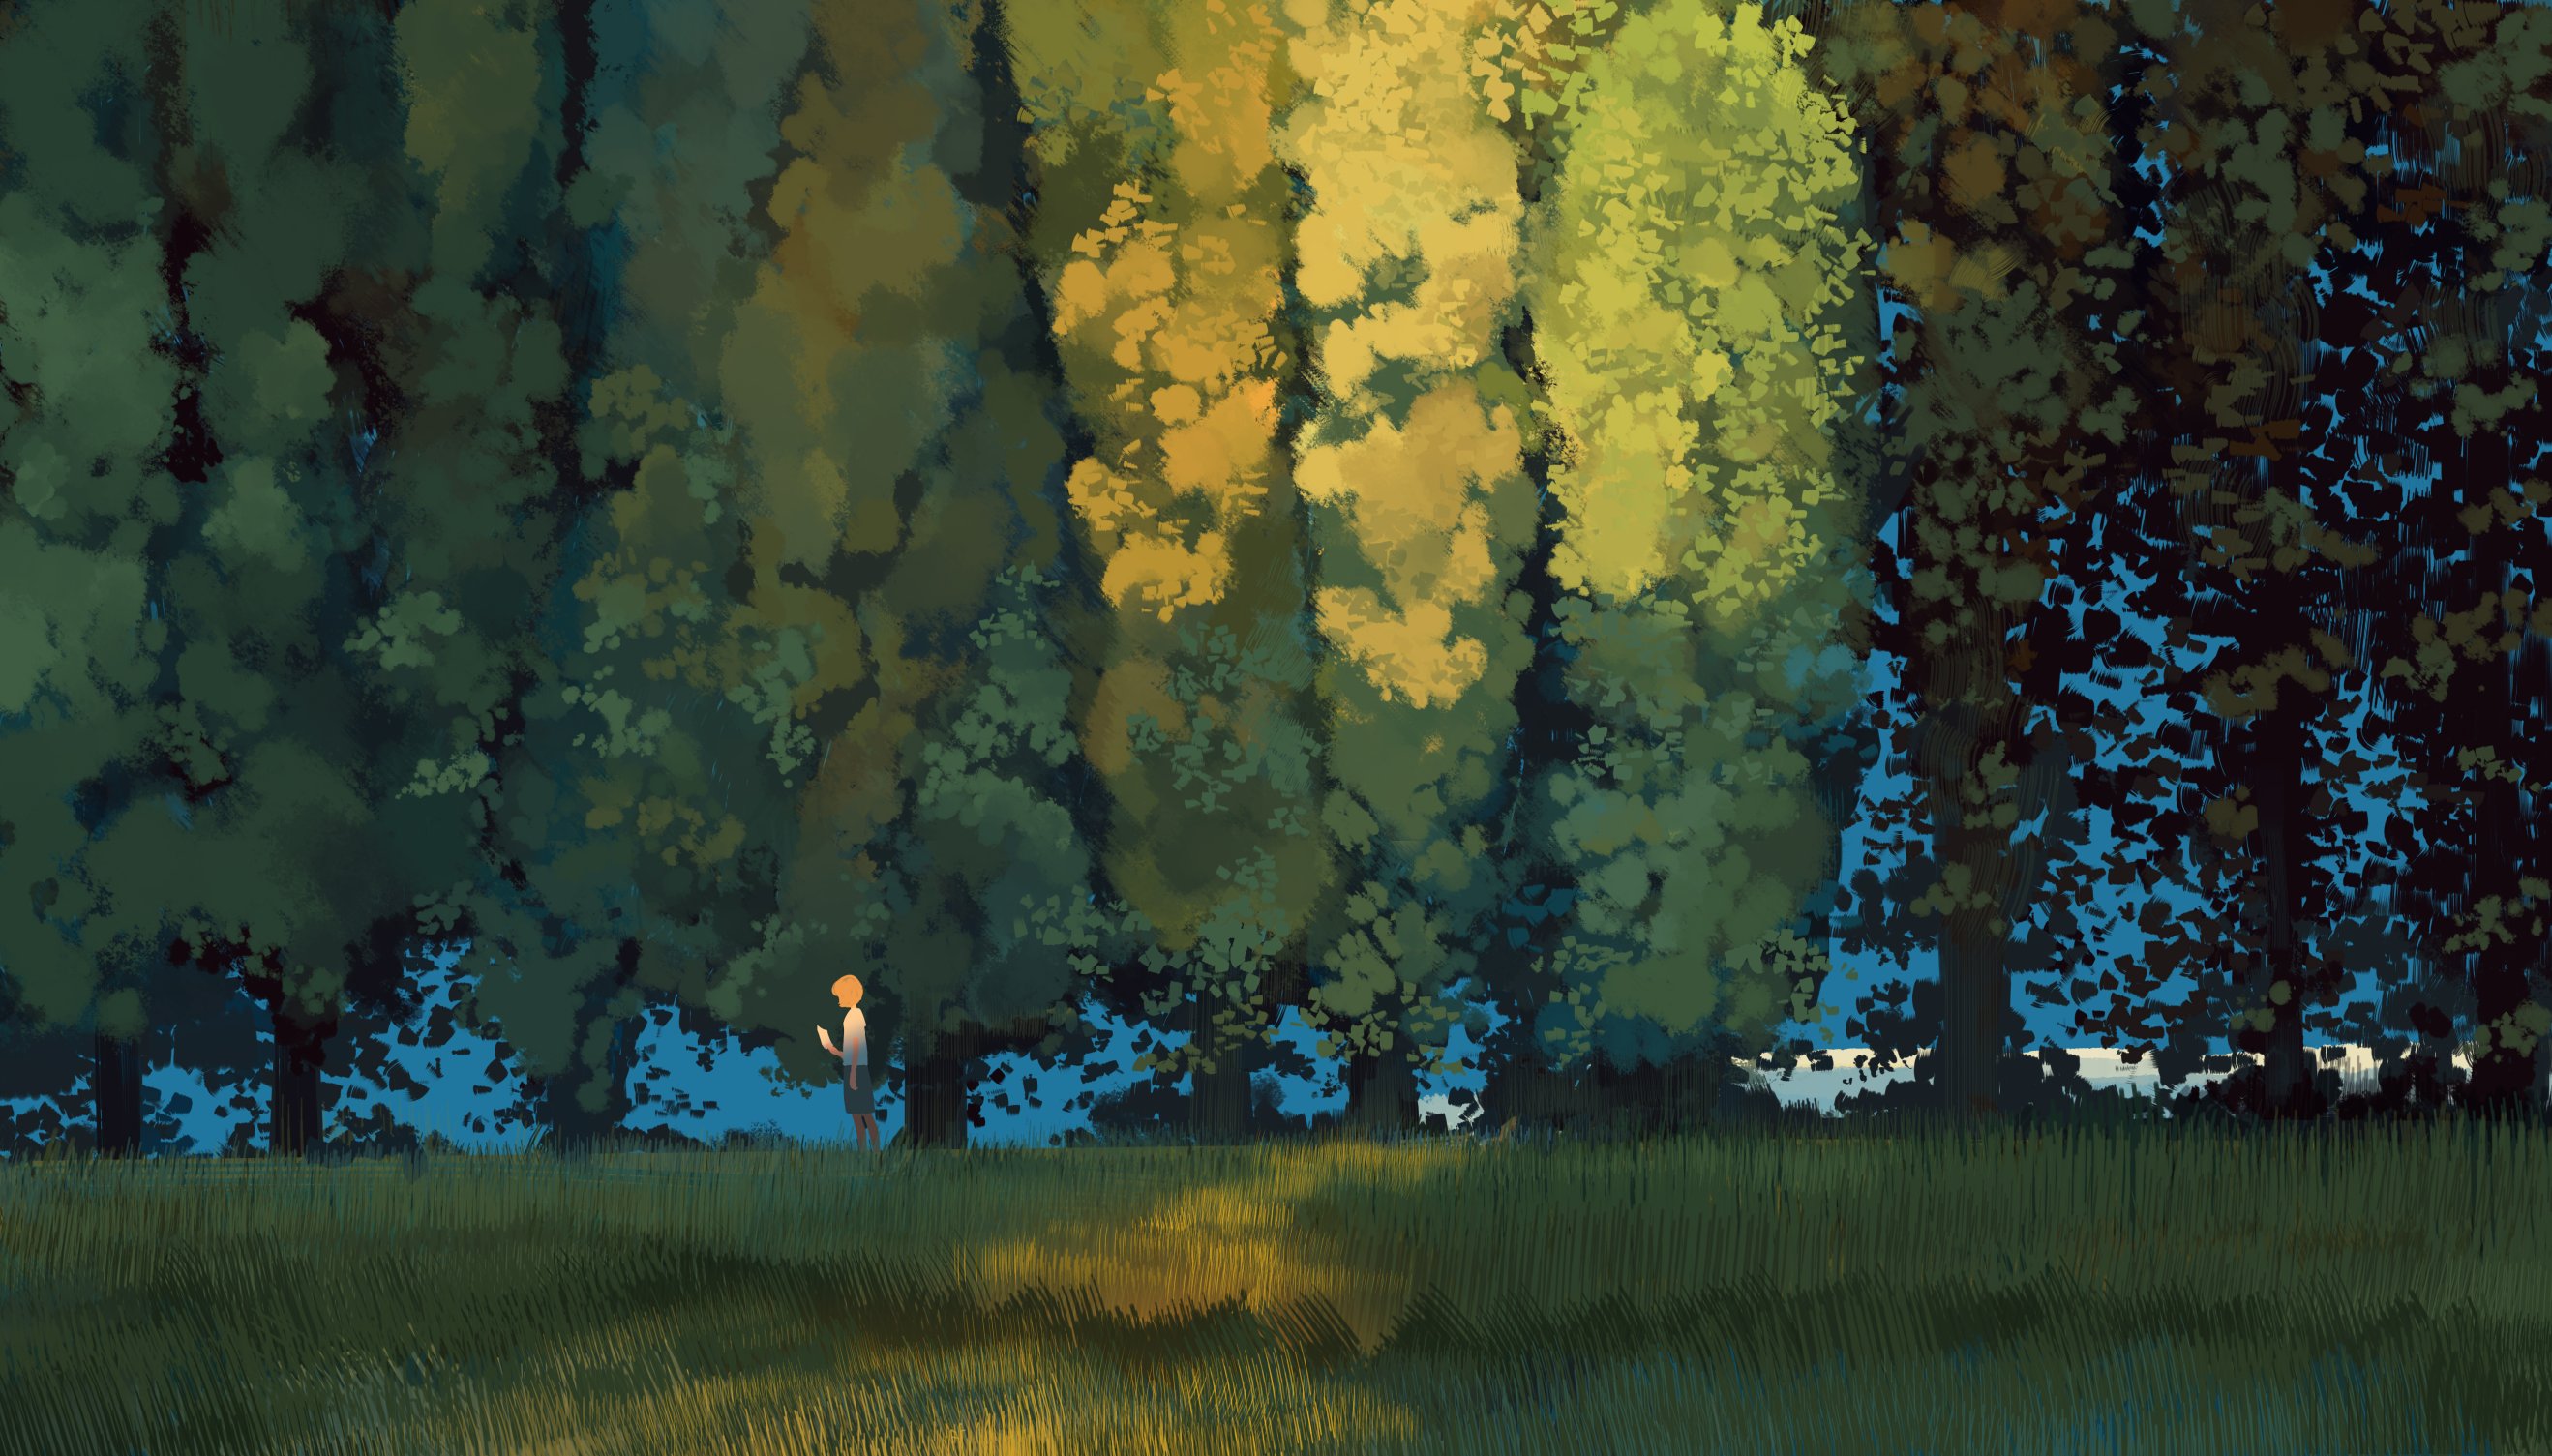 General 2637x1505 digital art digital painting plains grass sunset peaceful bangjoy standing trees